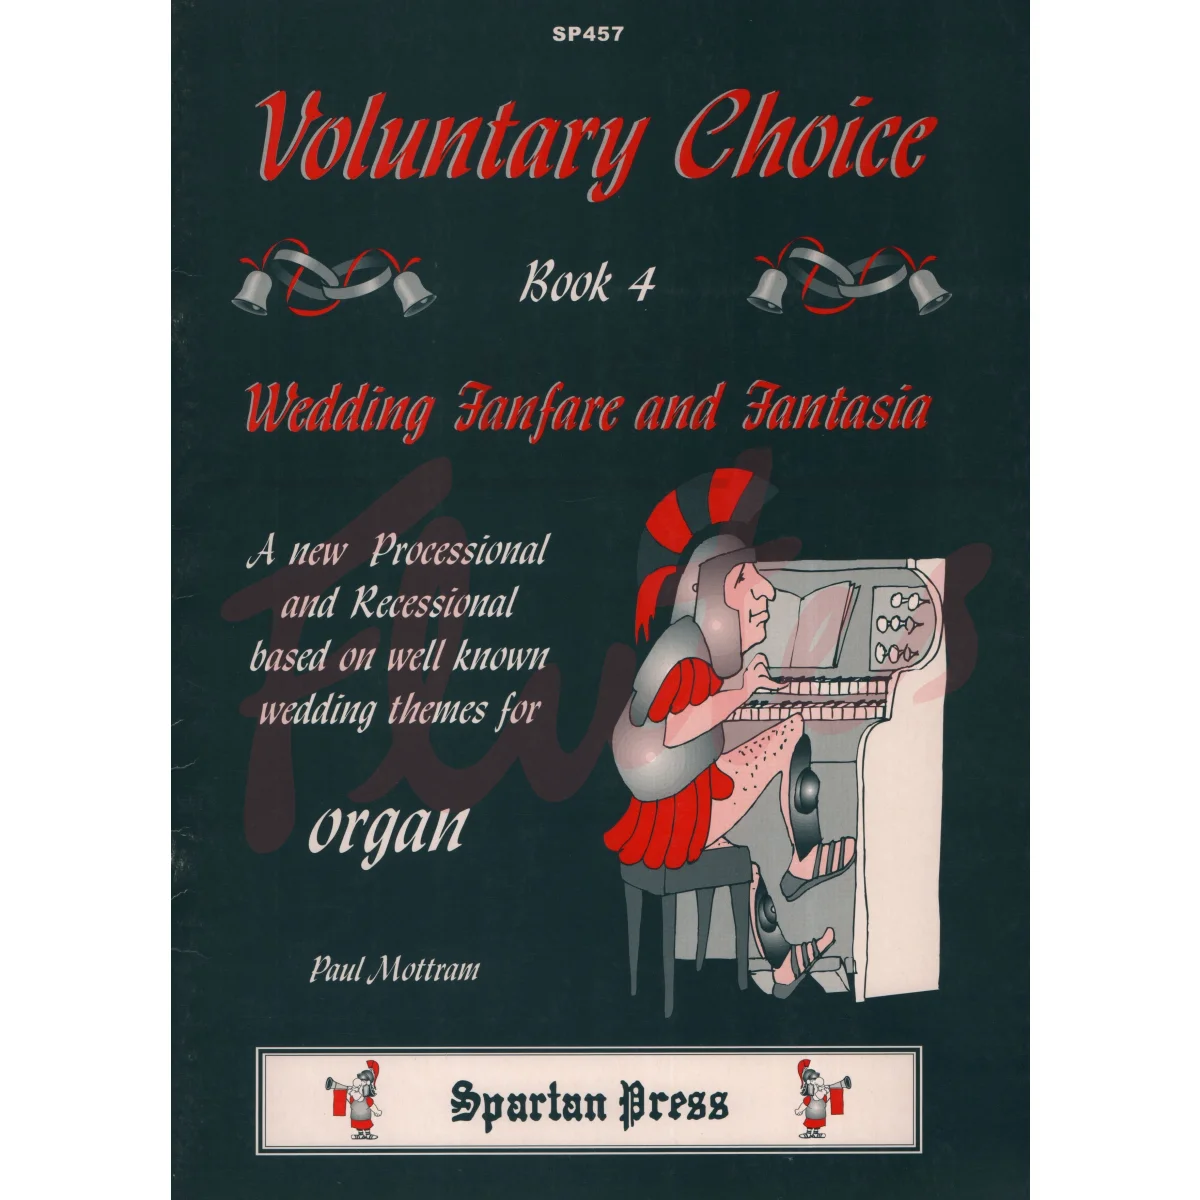 Voluntary Choice Book 4 - Wedding Fanfare and Fantasia